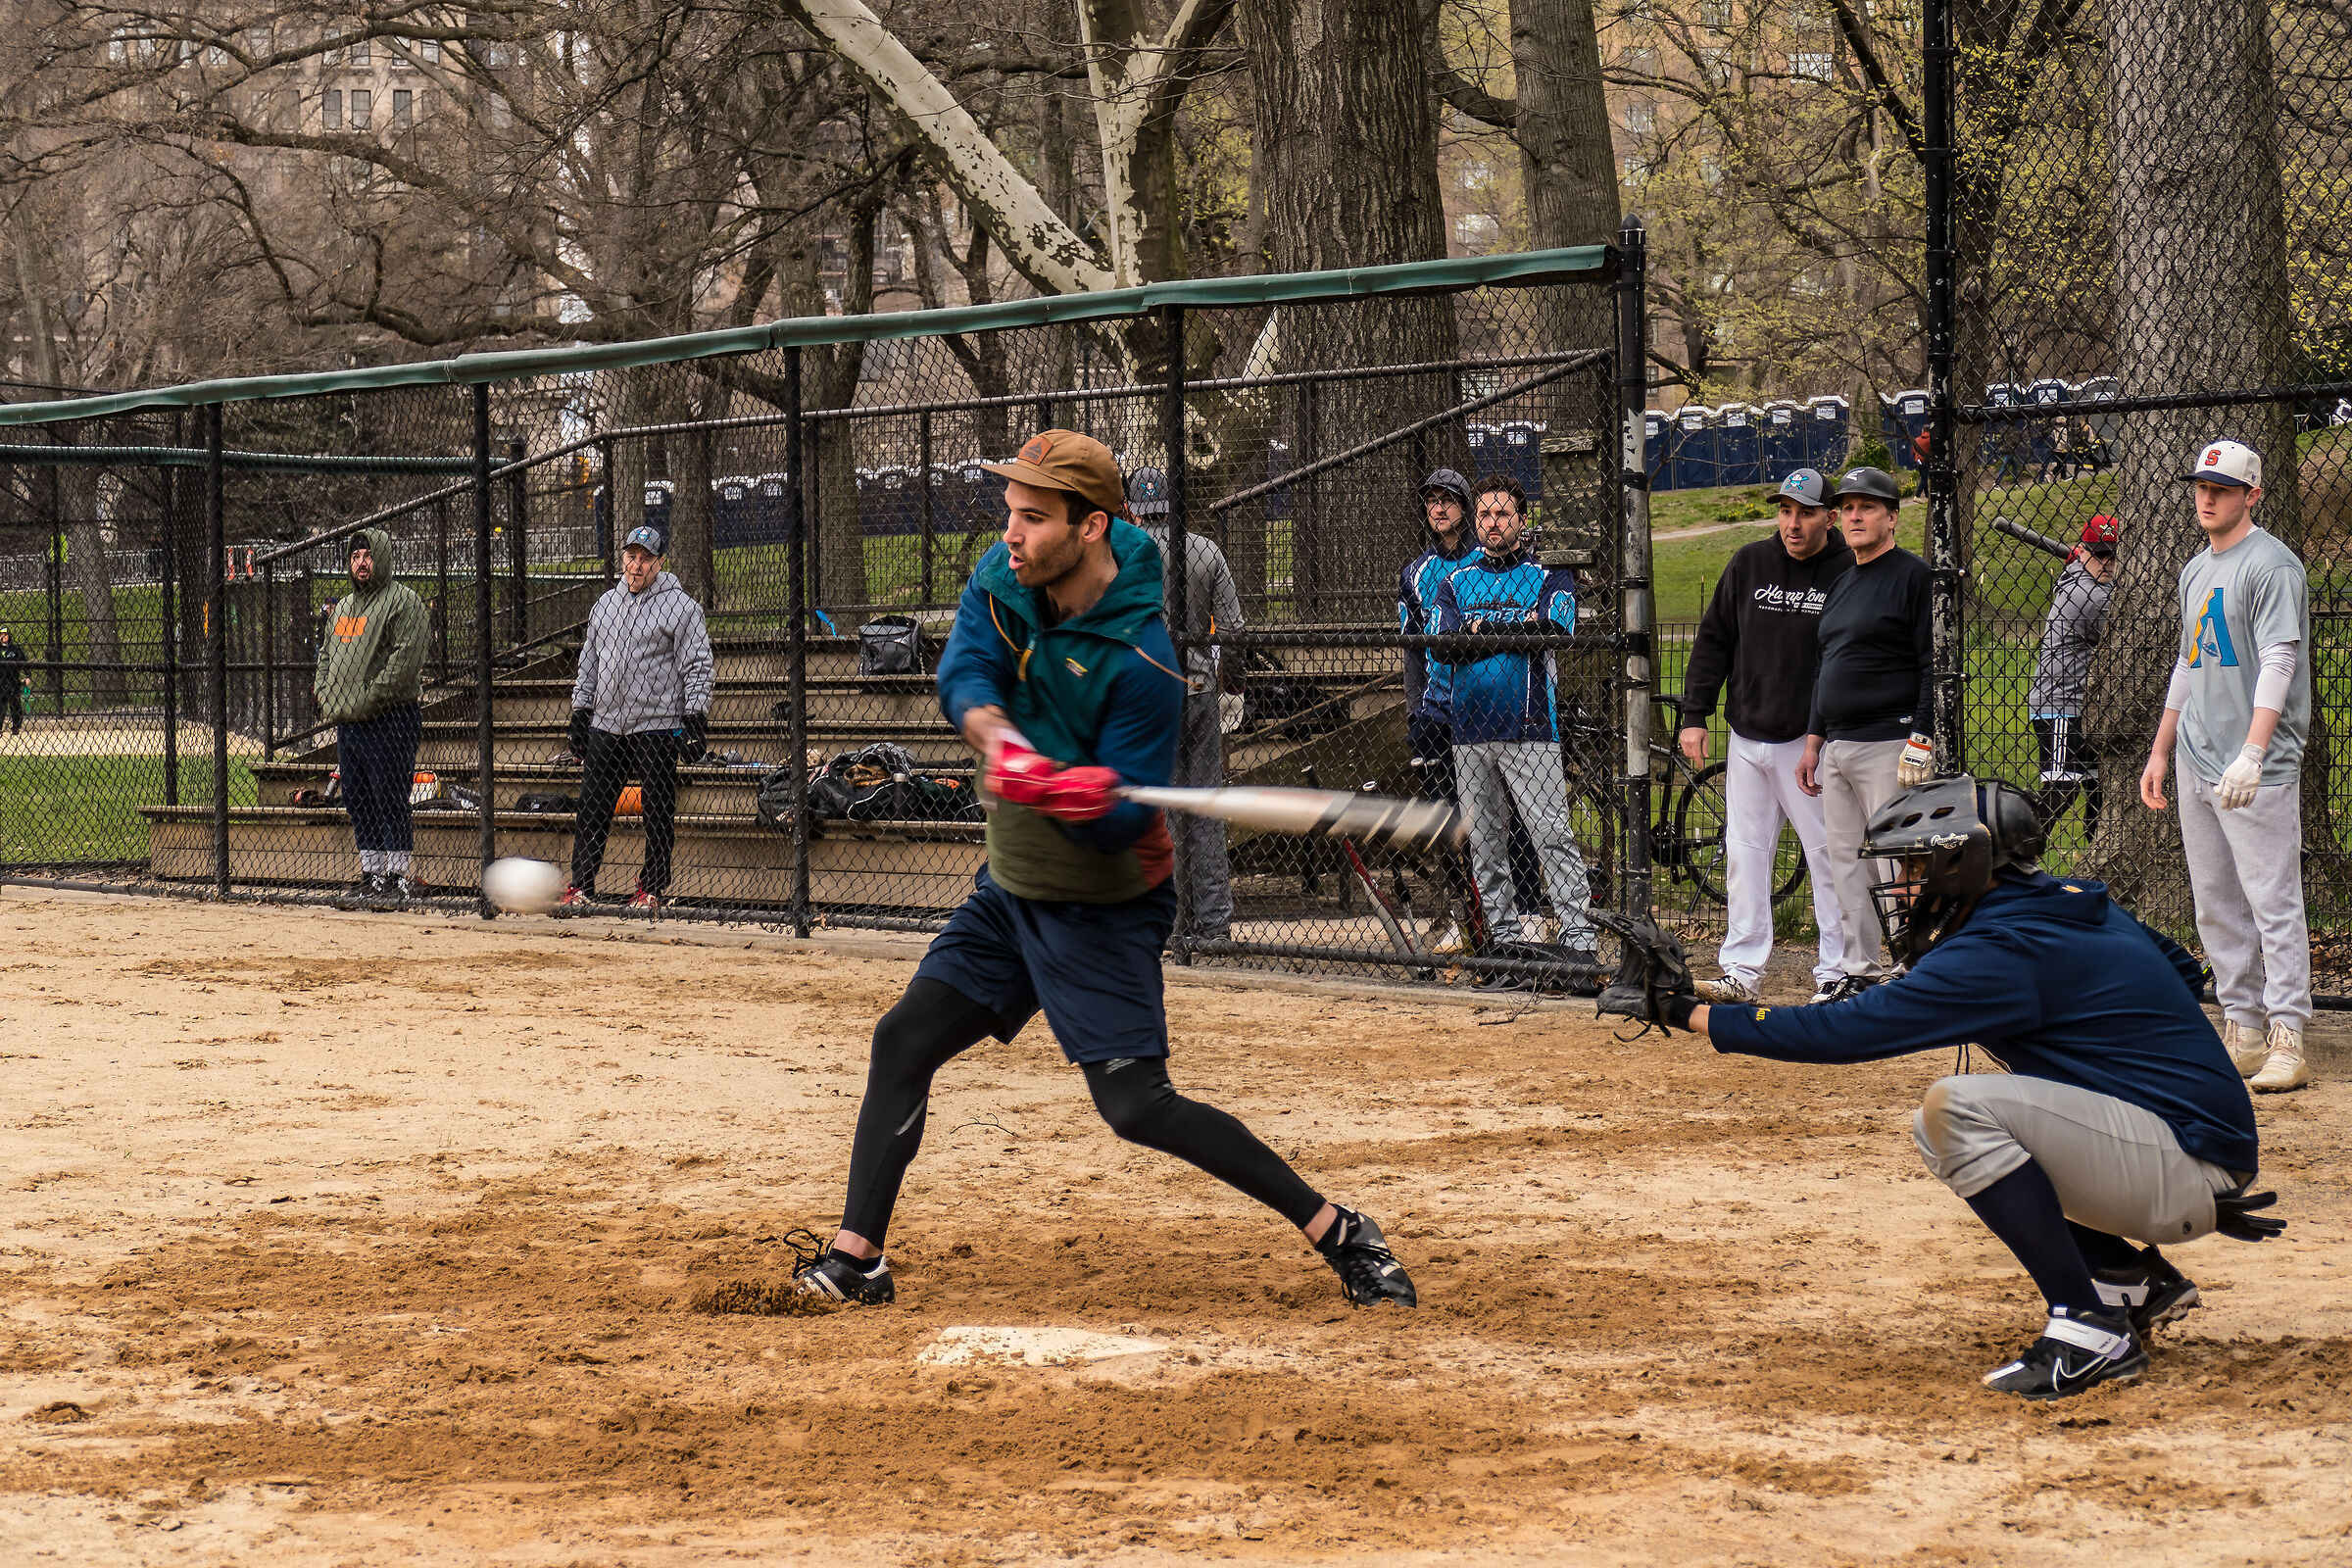 Baseball in Central Park...